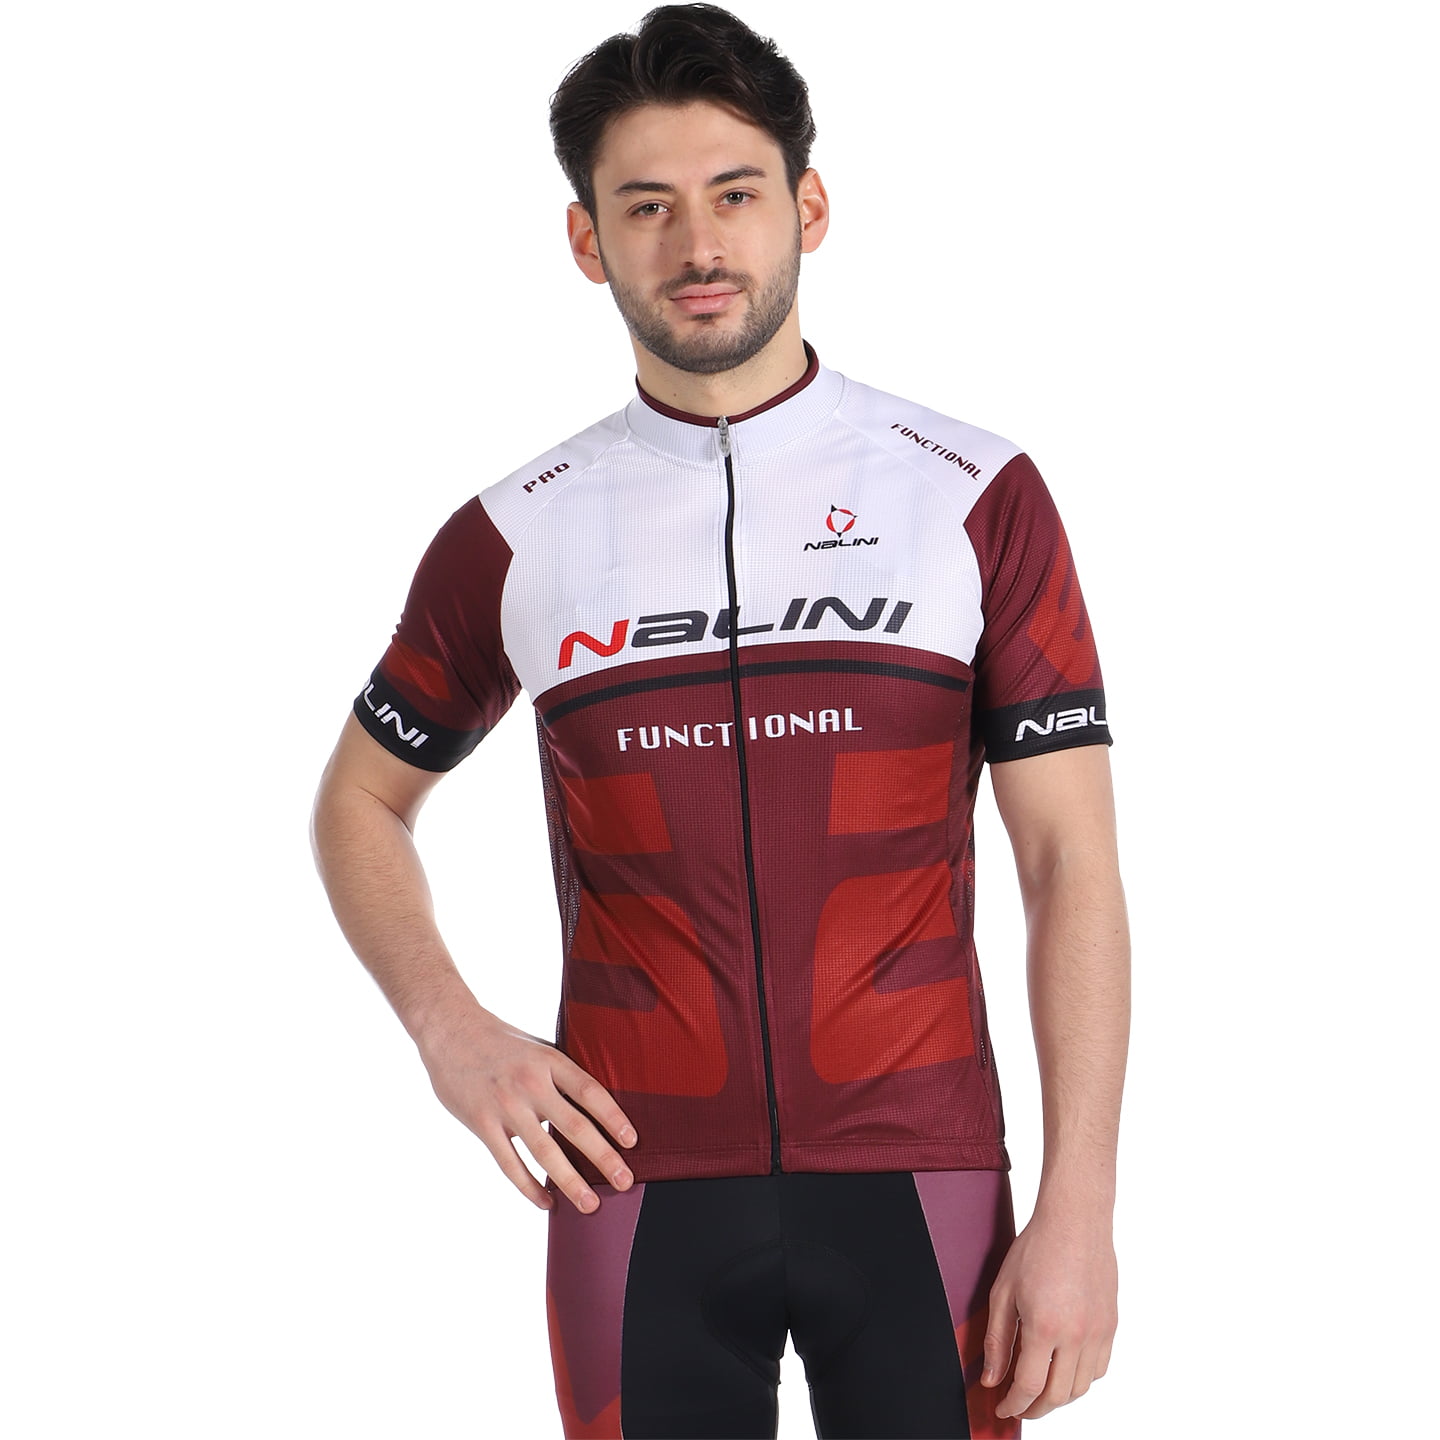 NALINI Bao Short Sleeve Jersey Short Sleeve Jersey, for men, size L, Cycling jersey, Cycling clothing